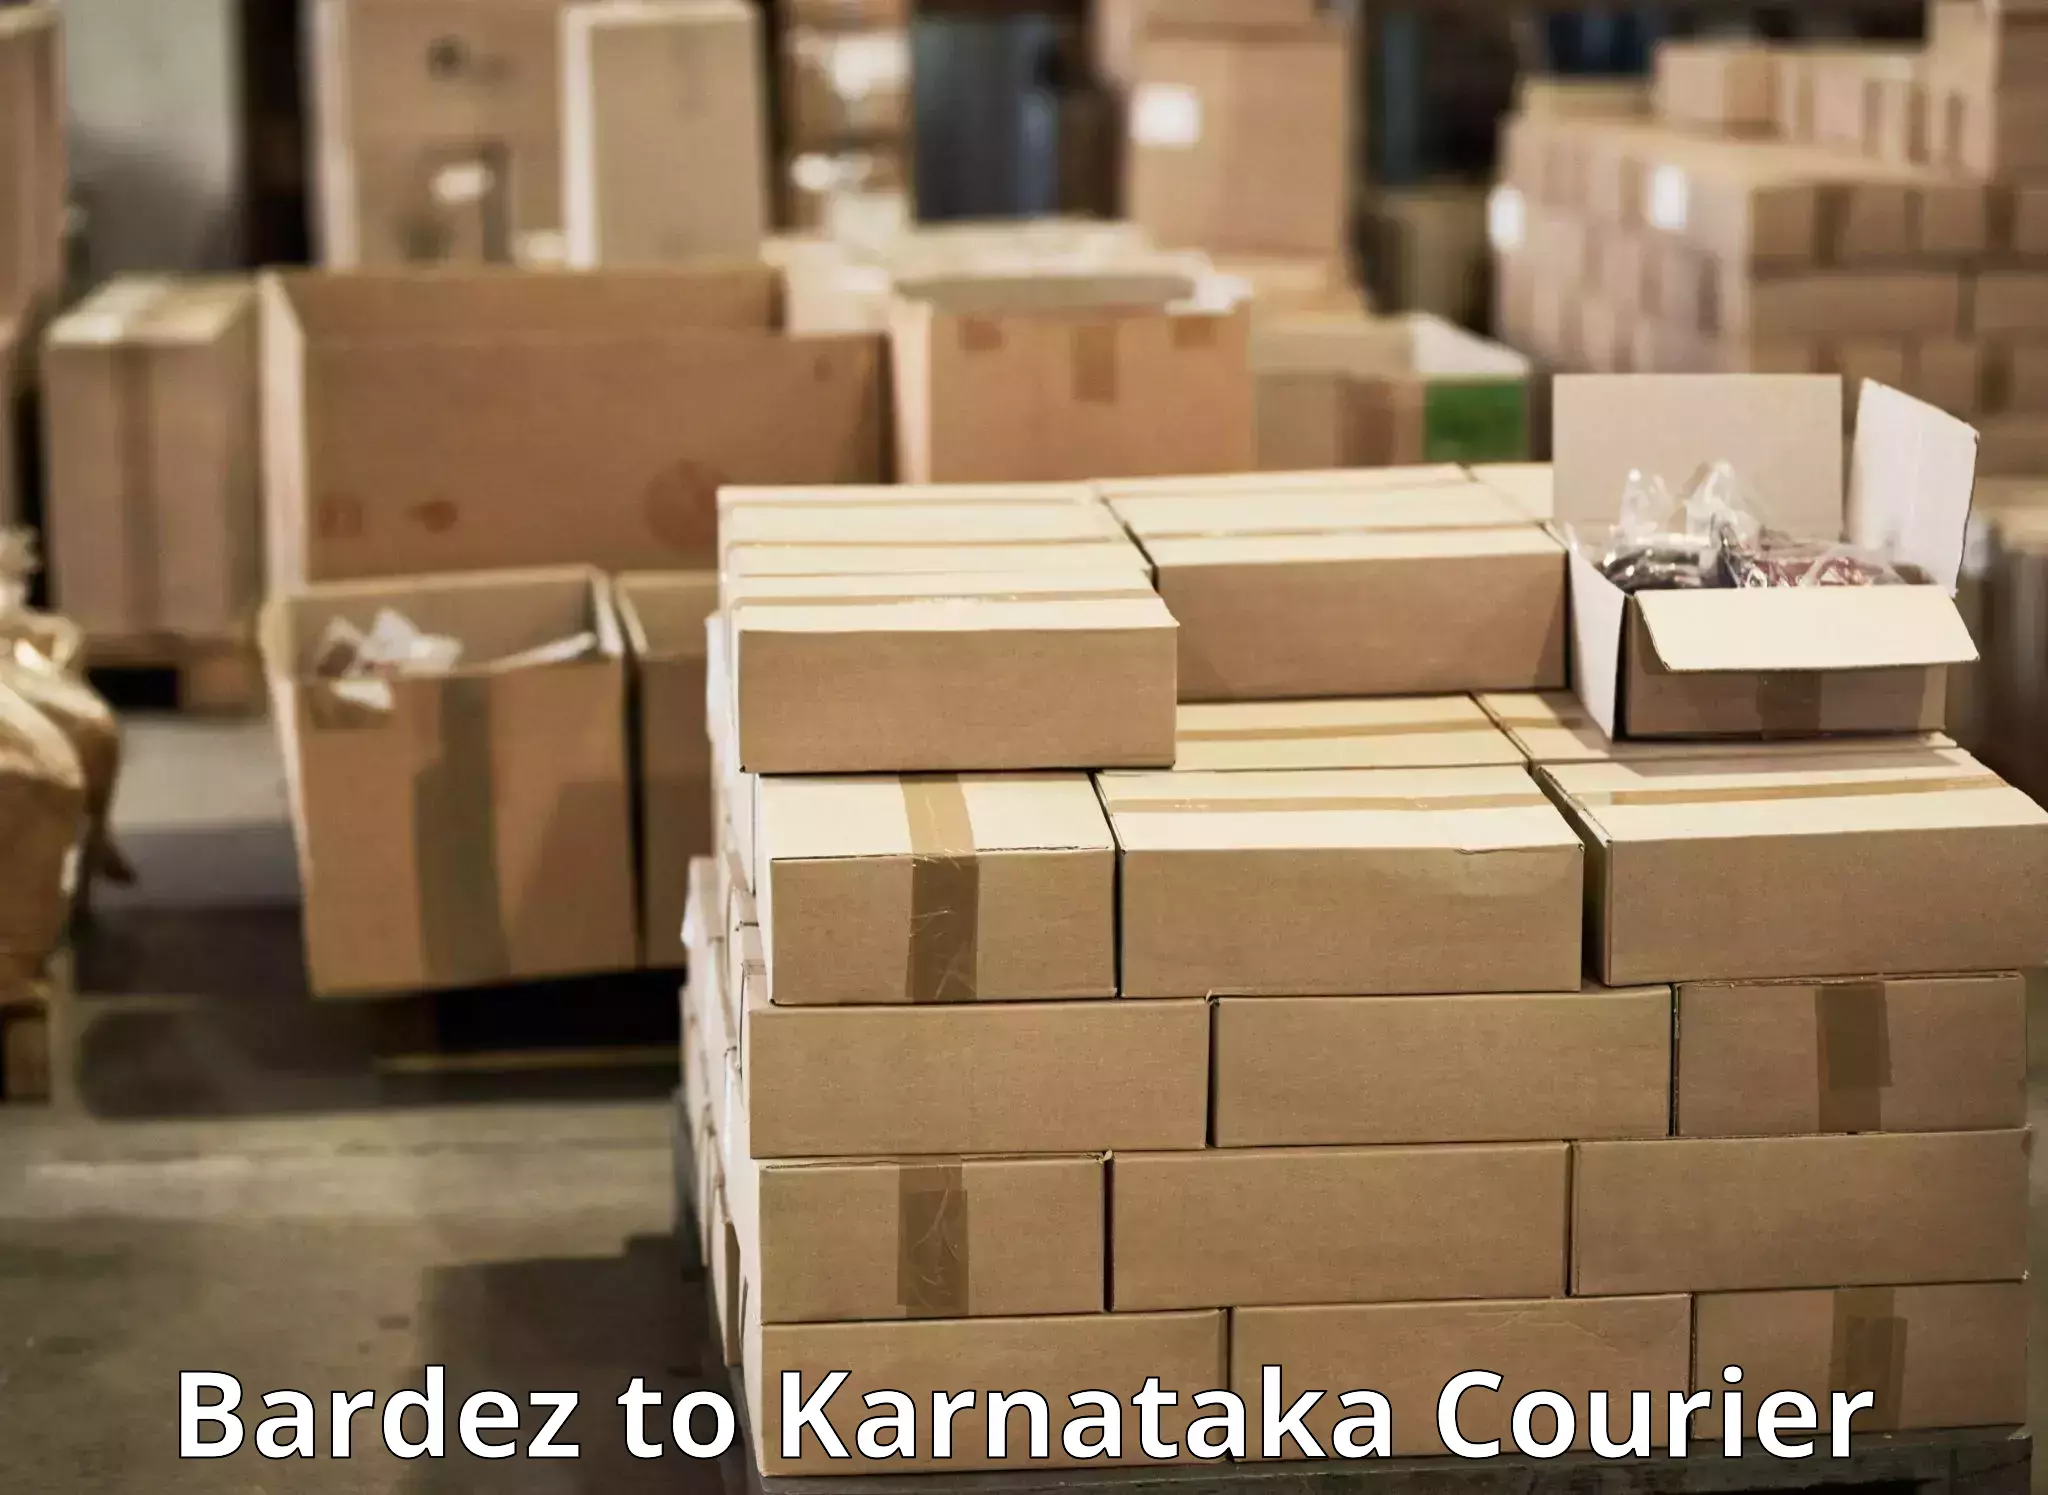 Round-the-clock parcel delivery Bardez to Karnataka